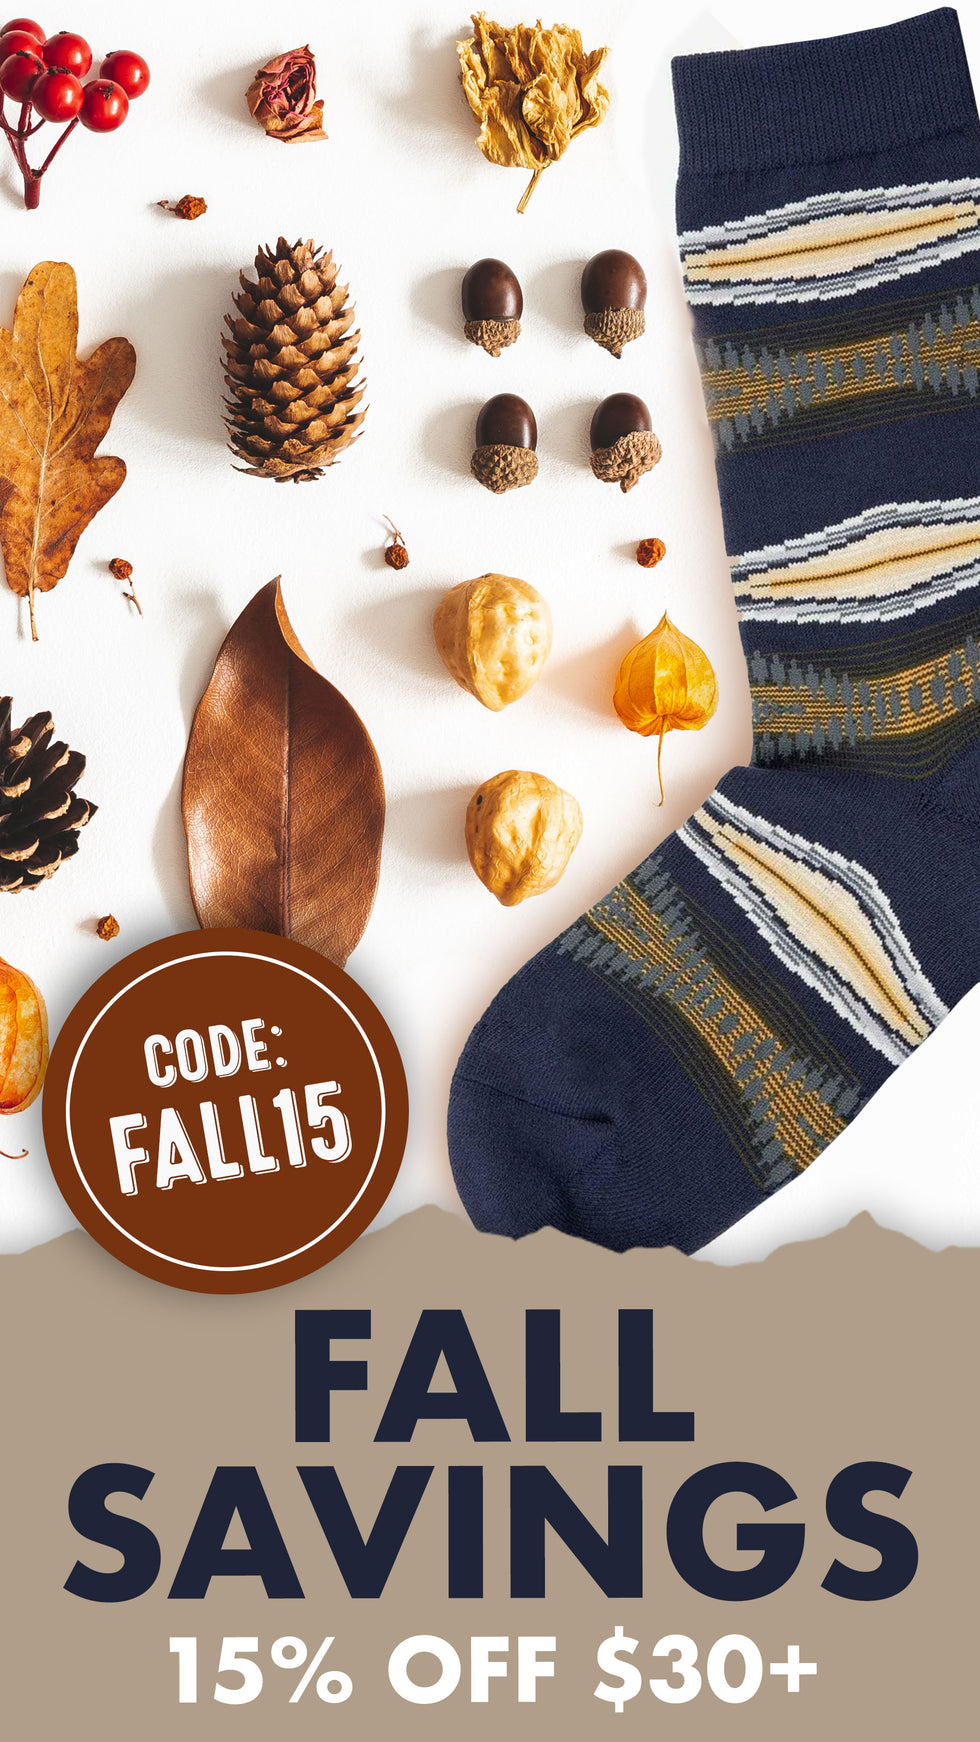 Fall Savings 15% Off $30+ with code FALL15